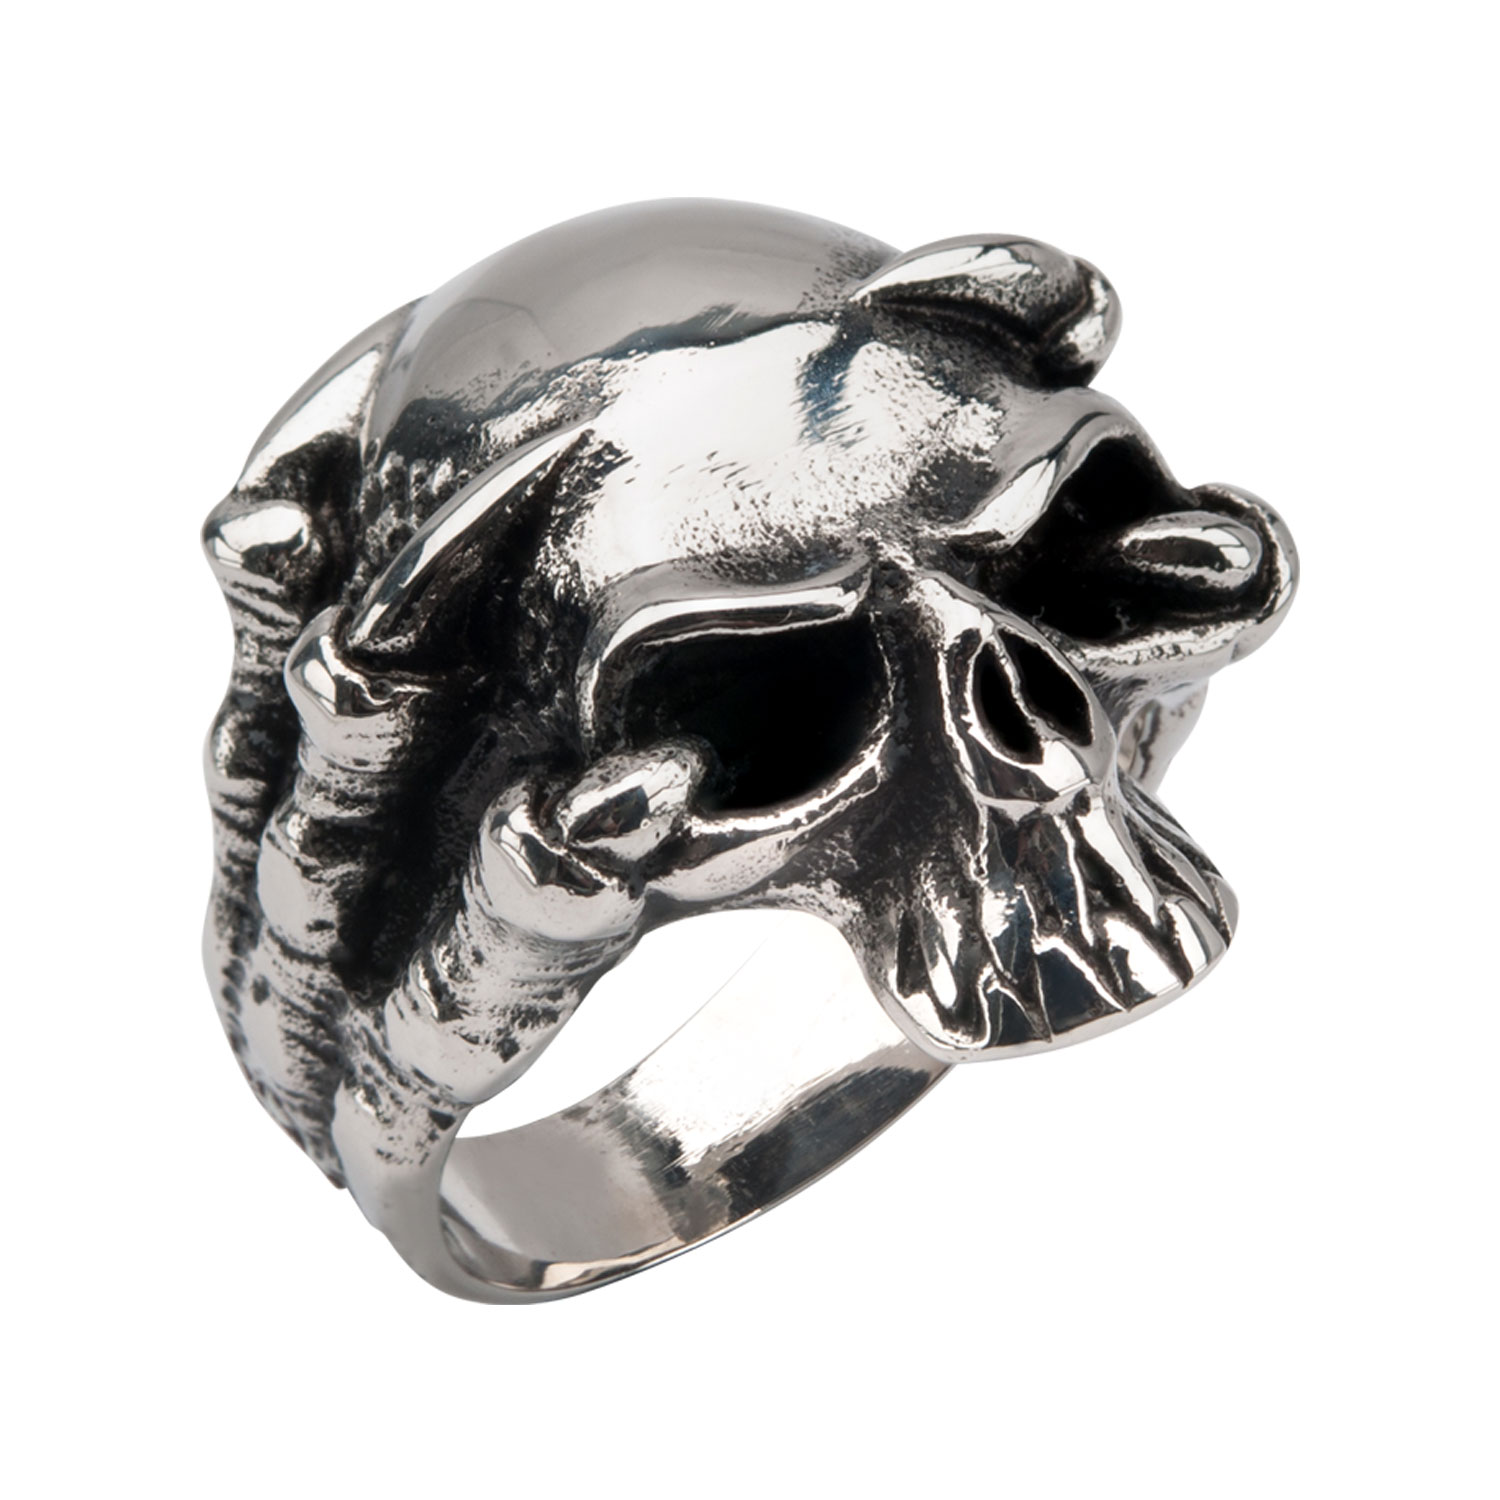 Black Oxidized Skull Ring with Claws Midtown Diamonds Reno, NV